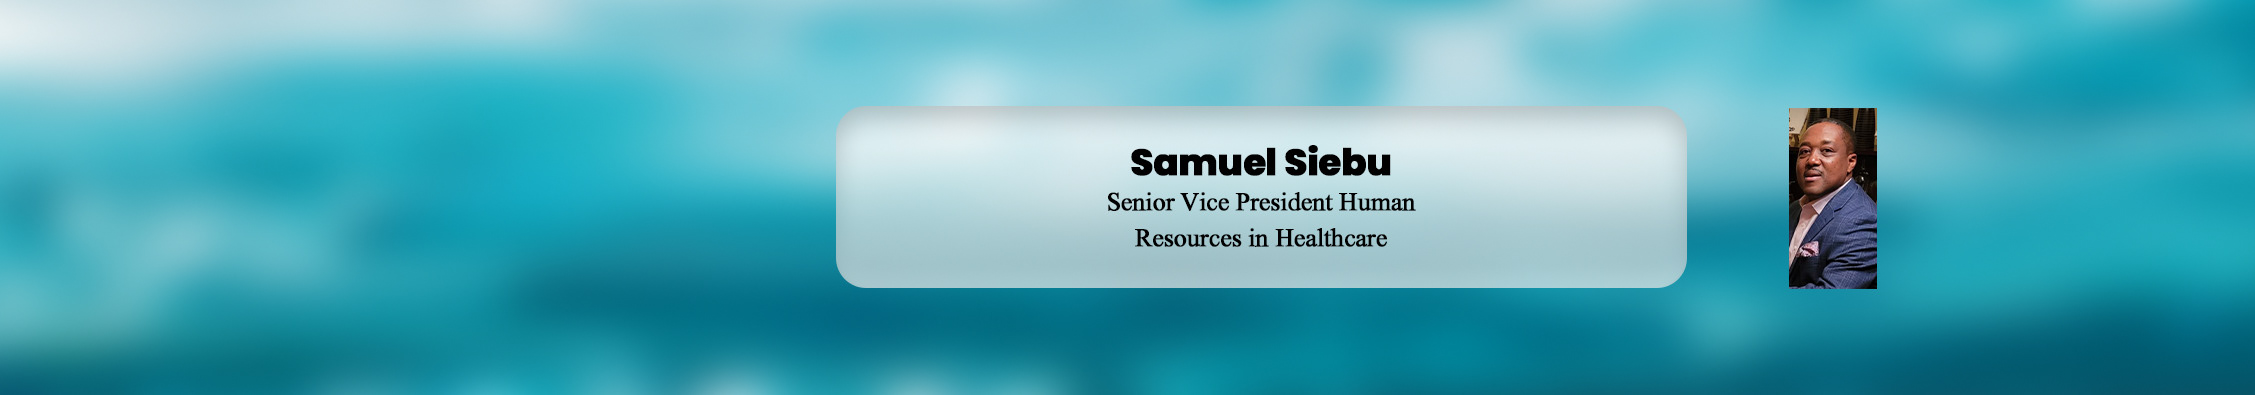 Samuel Siebu's profile banner